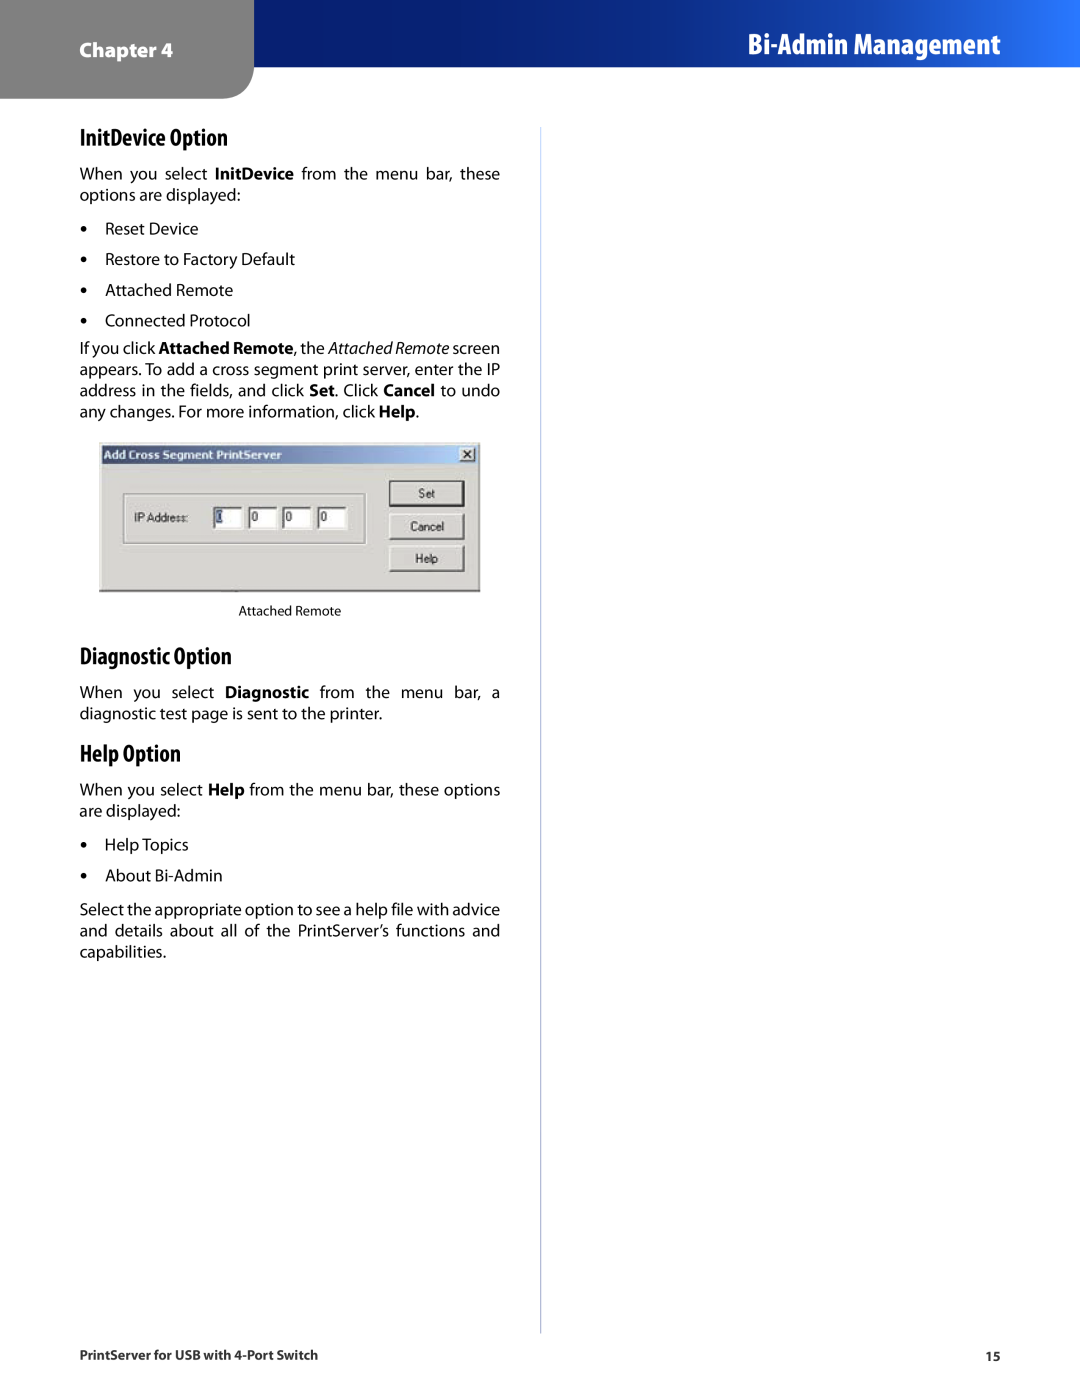 Cisco Systems PSUS4 manual InitDevice Option, Diagnostic Option, Help Option, Bi-Admin Management, Chapter 